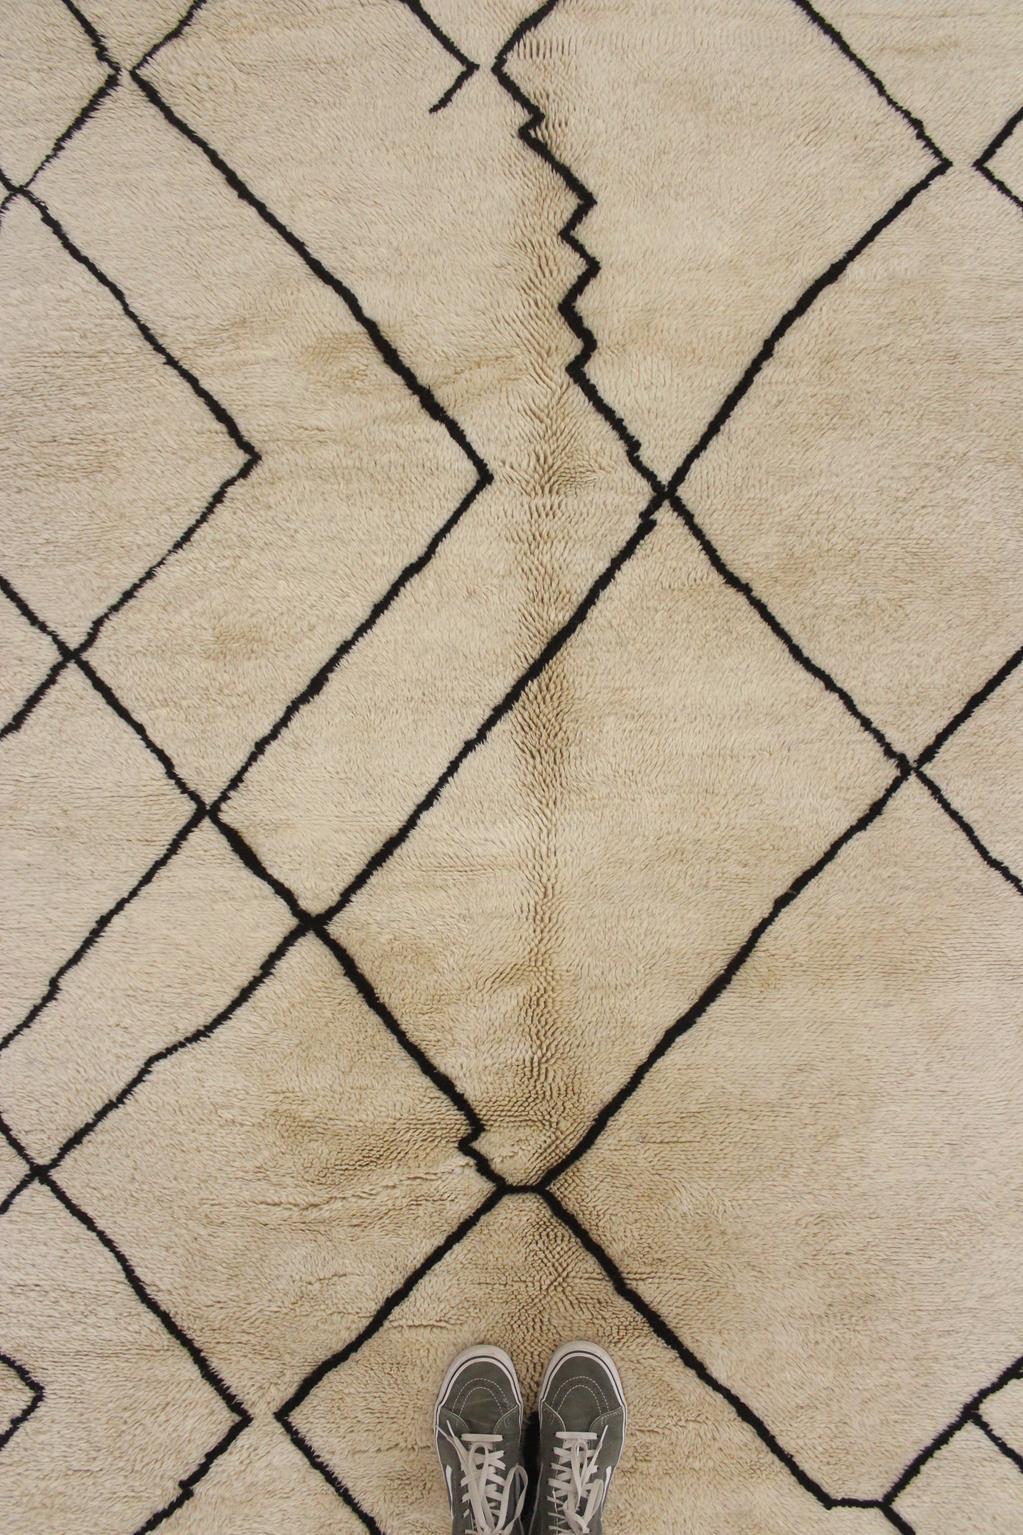 Modern Moroccan wool Mrirt rug - Beige/black - 5.7x8.3feet / 175x255cm For Sale 2